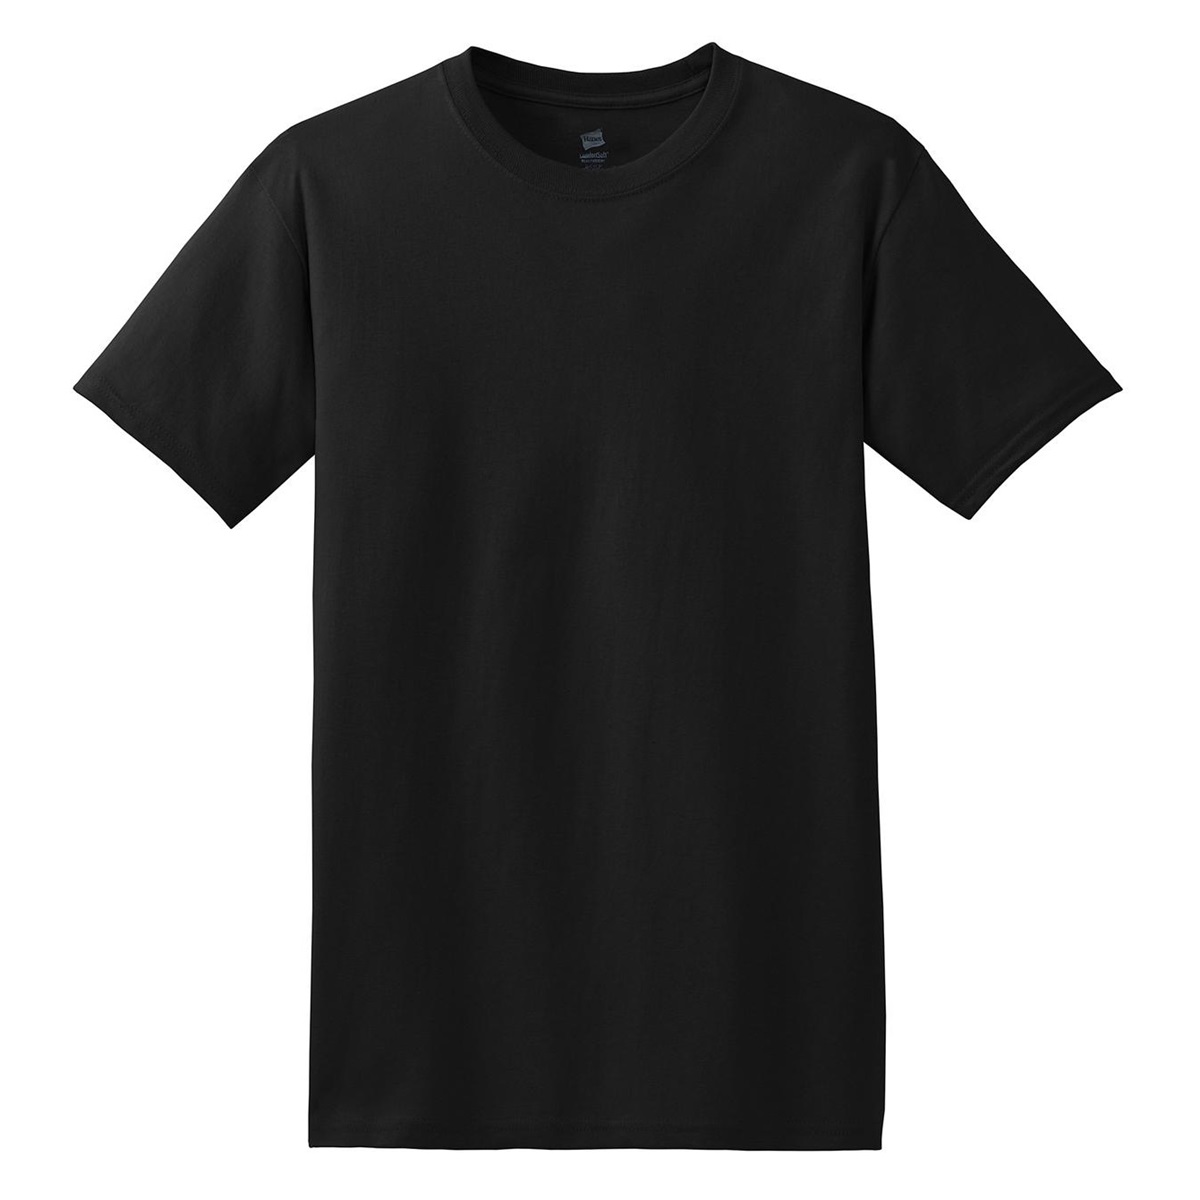 Hanes 5280 ComfortSoft Heavyweight Cotton T-Shirt - Black | FullSource.com